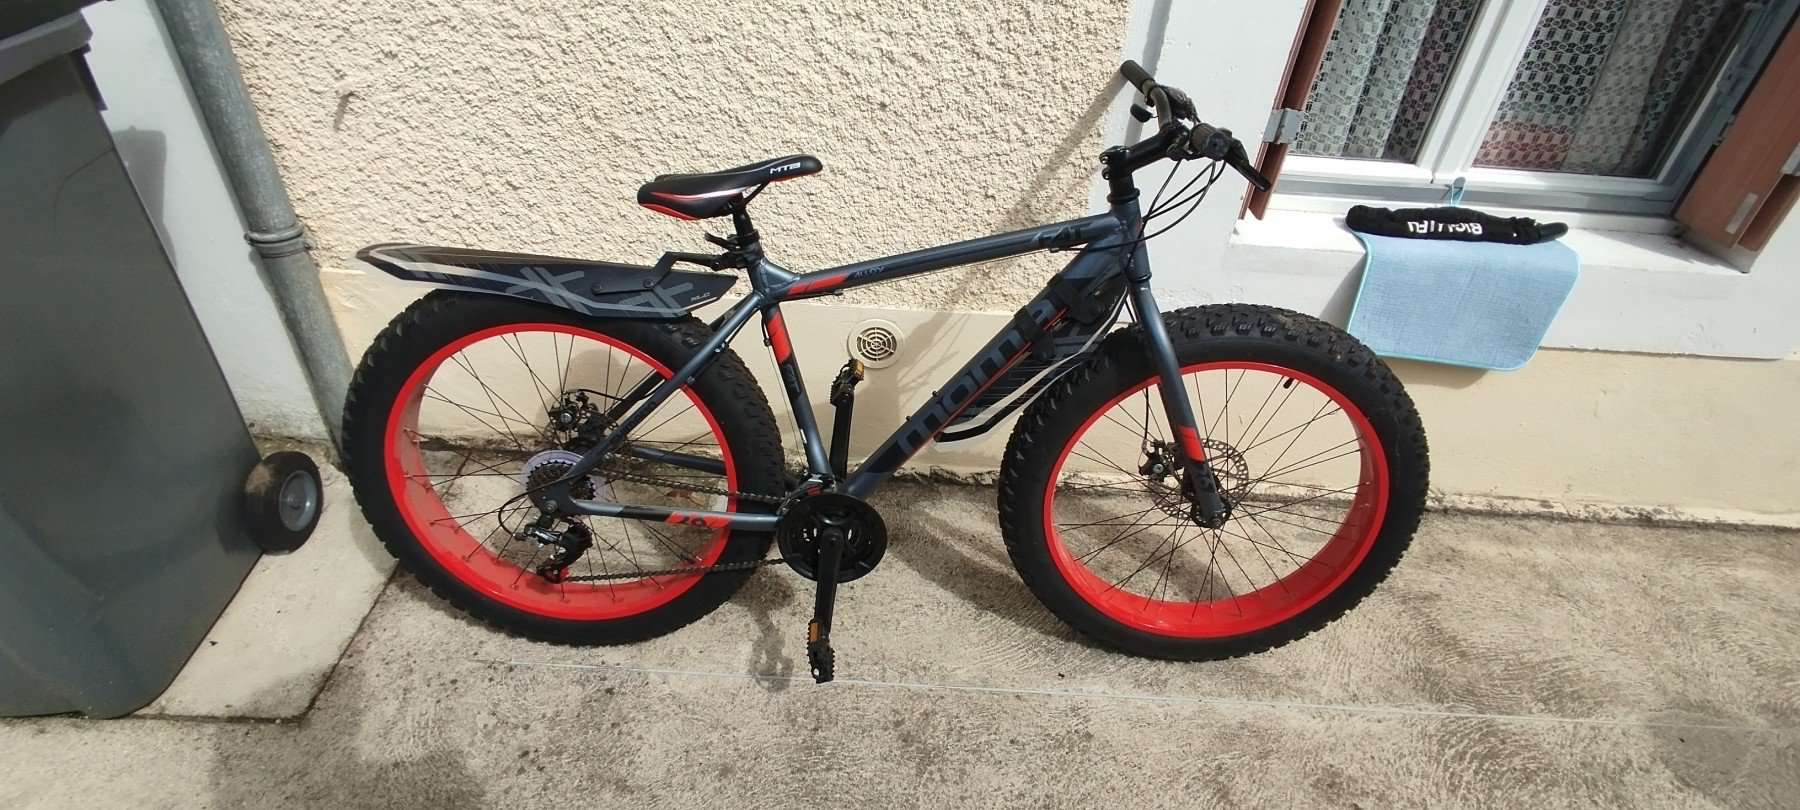 Moma bikes Bicicletas de segunda mano baratas